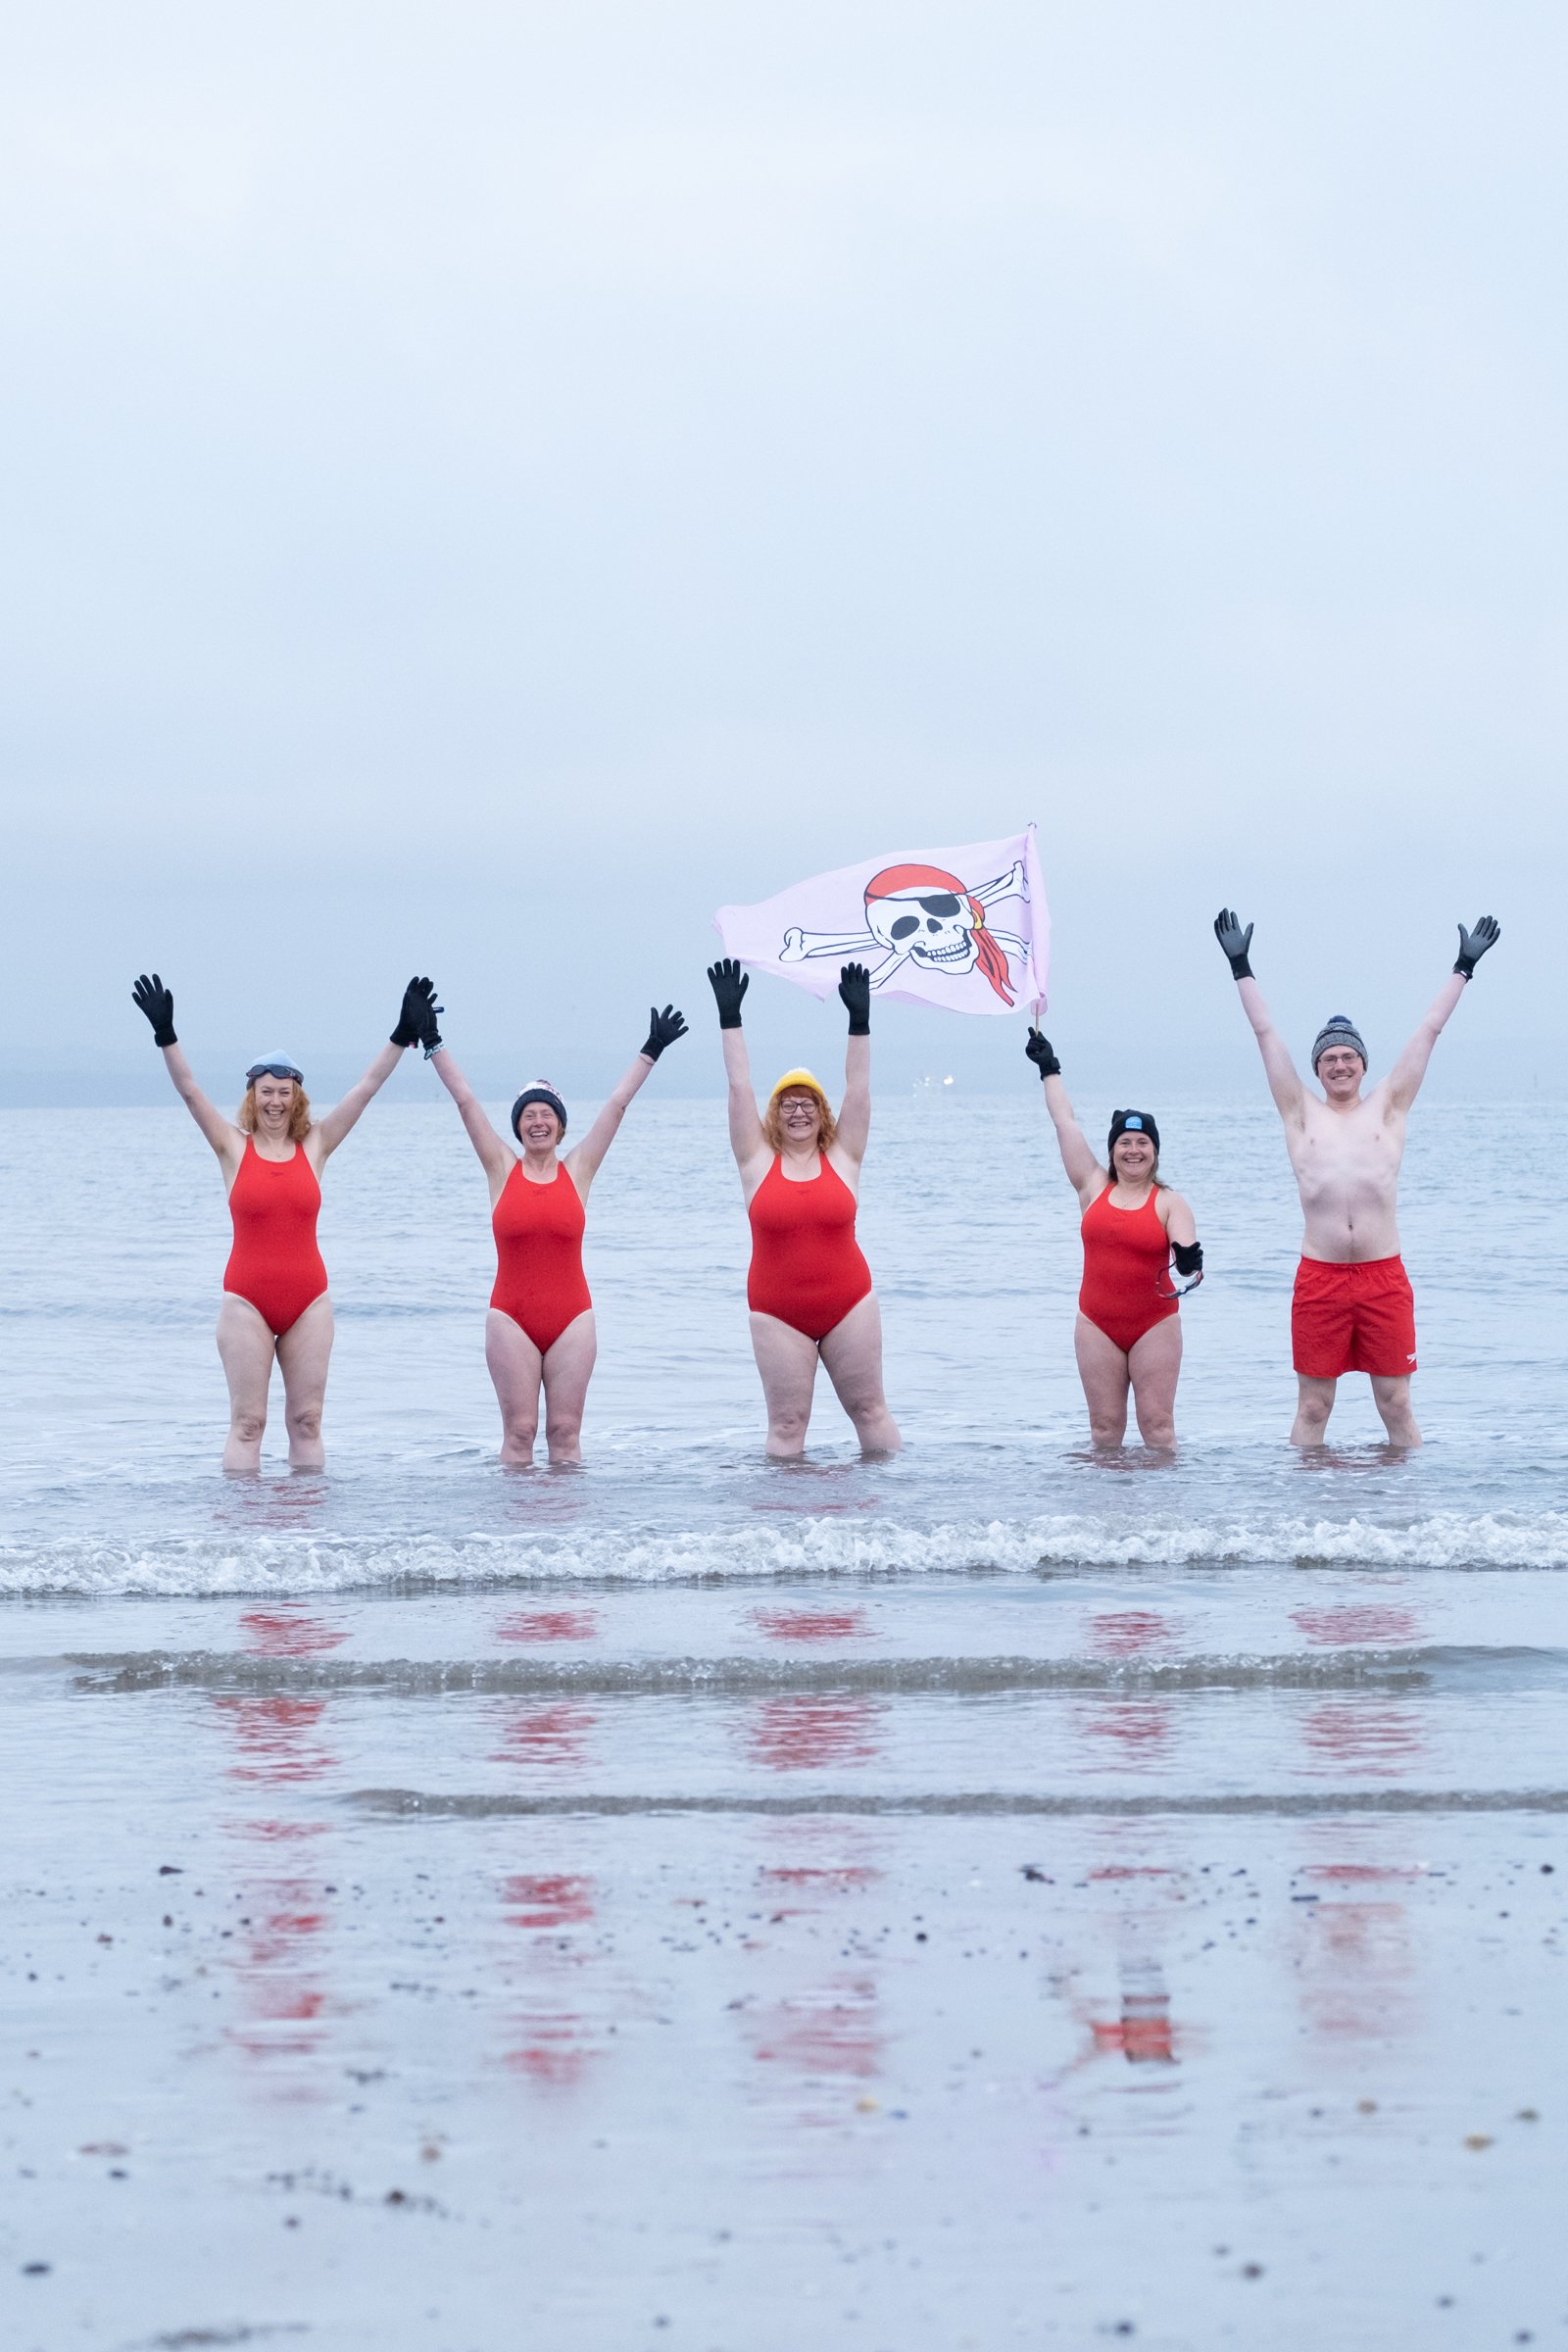 Speedo swimmers celebrate in the water